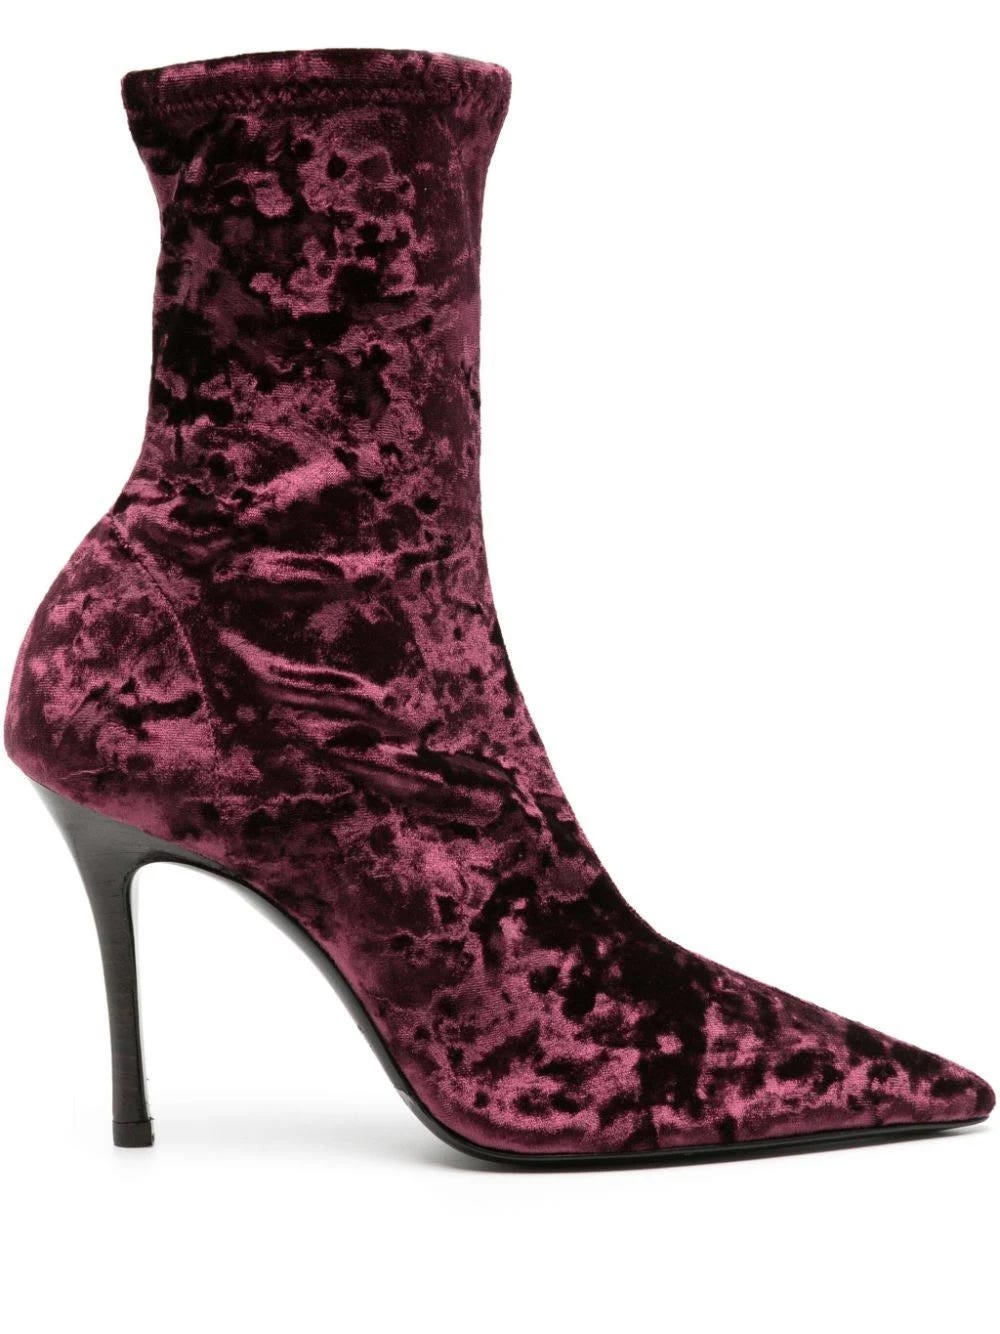 Stylish Purple Crushed-Velvet Heel Boots by Arteana | Image